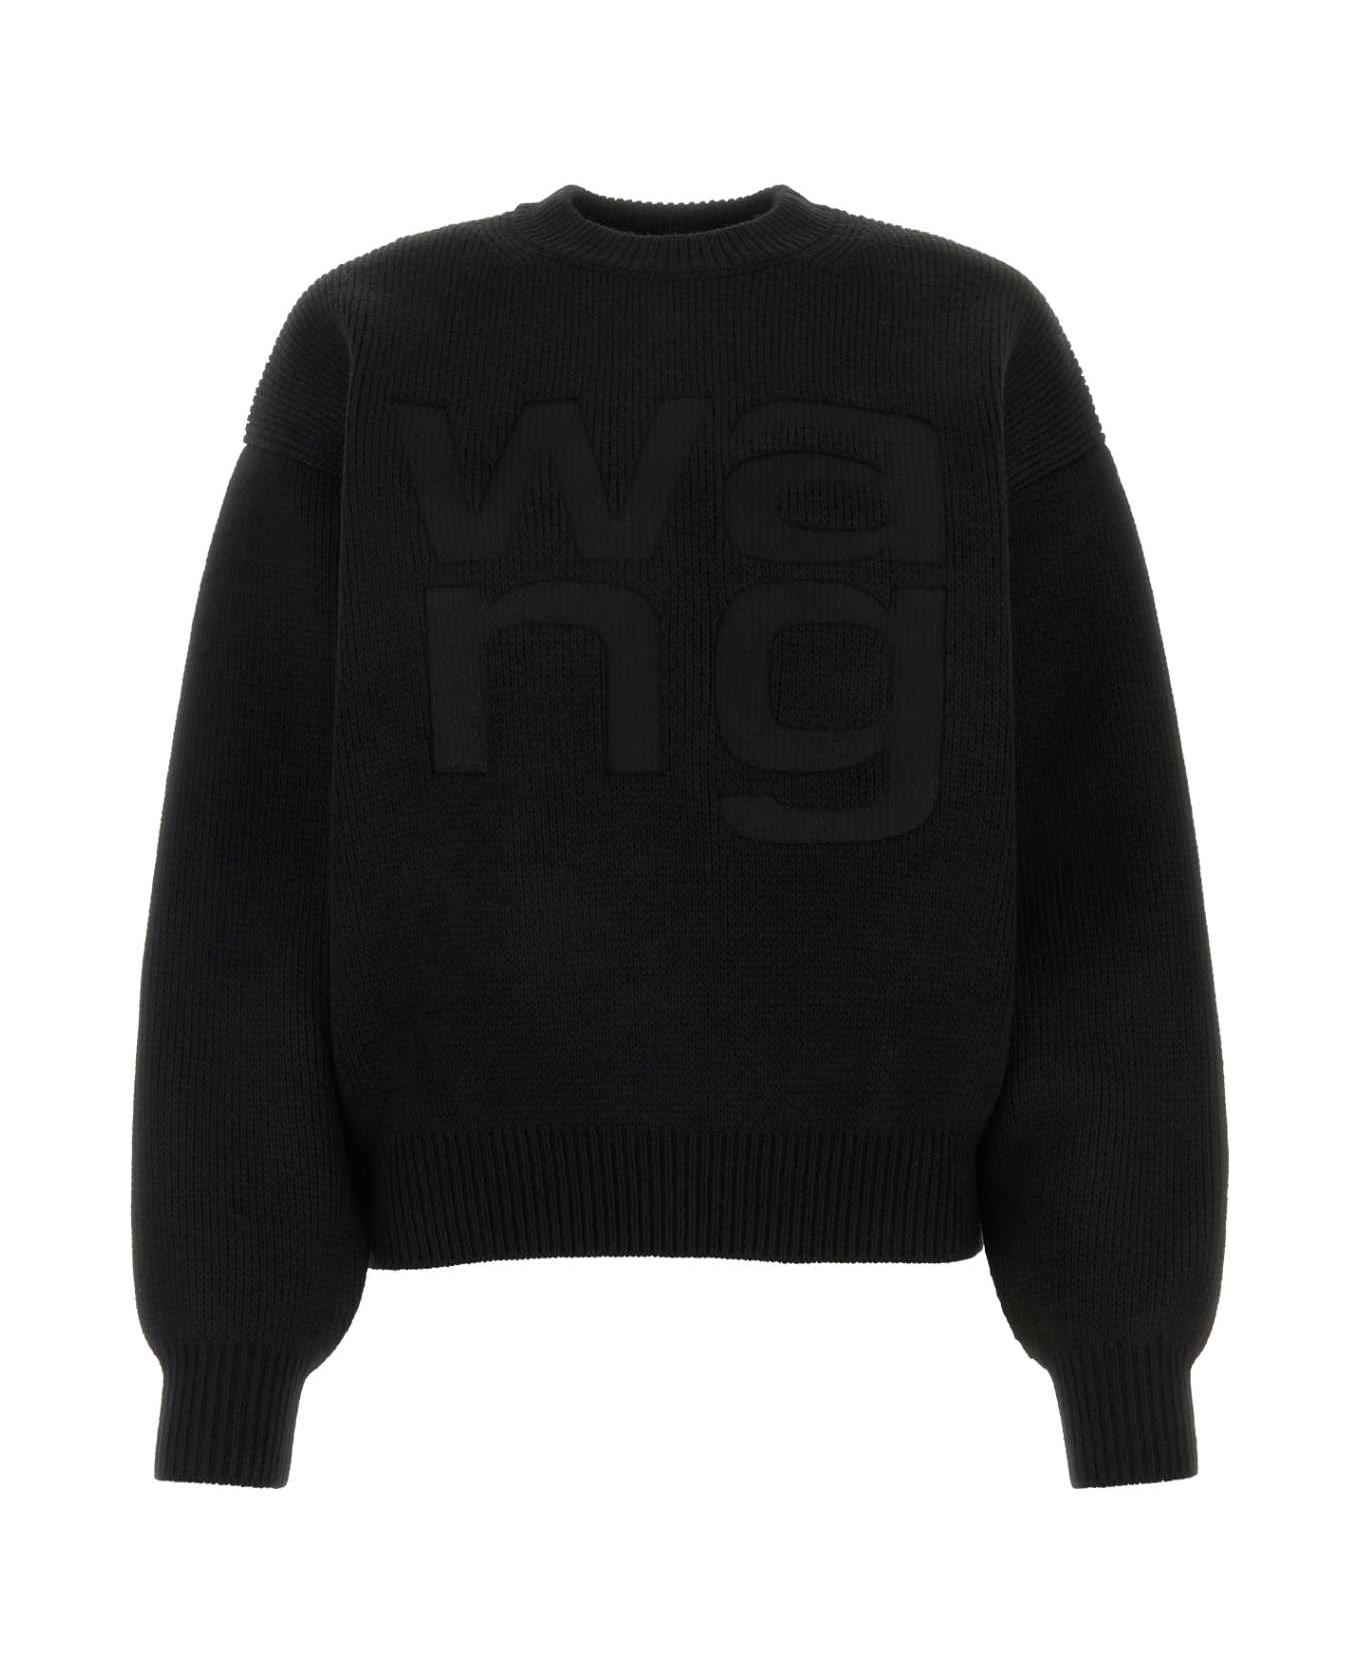 T by Alexander Wang Black Acrylic Blend Sweater - BLACK ニットウェア